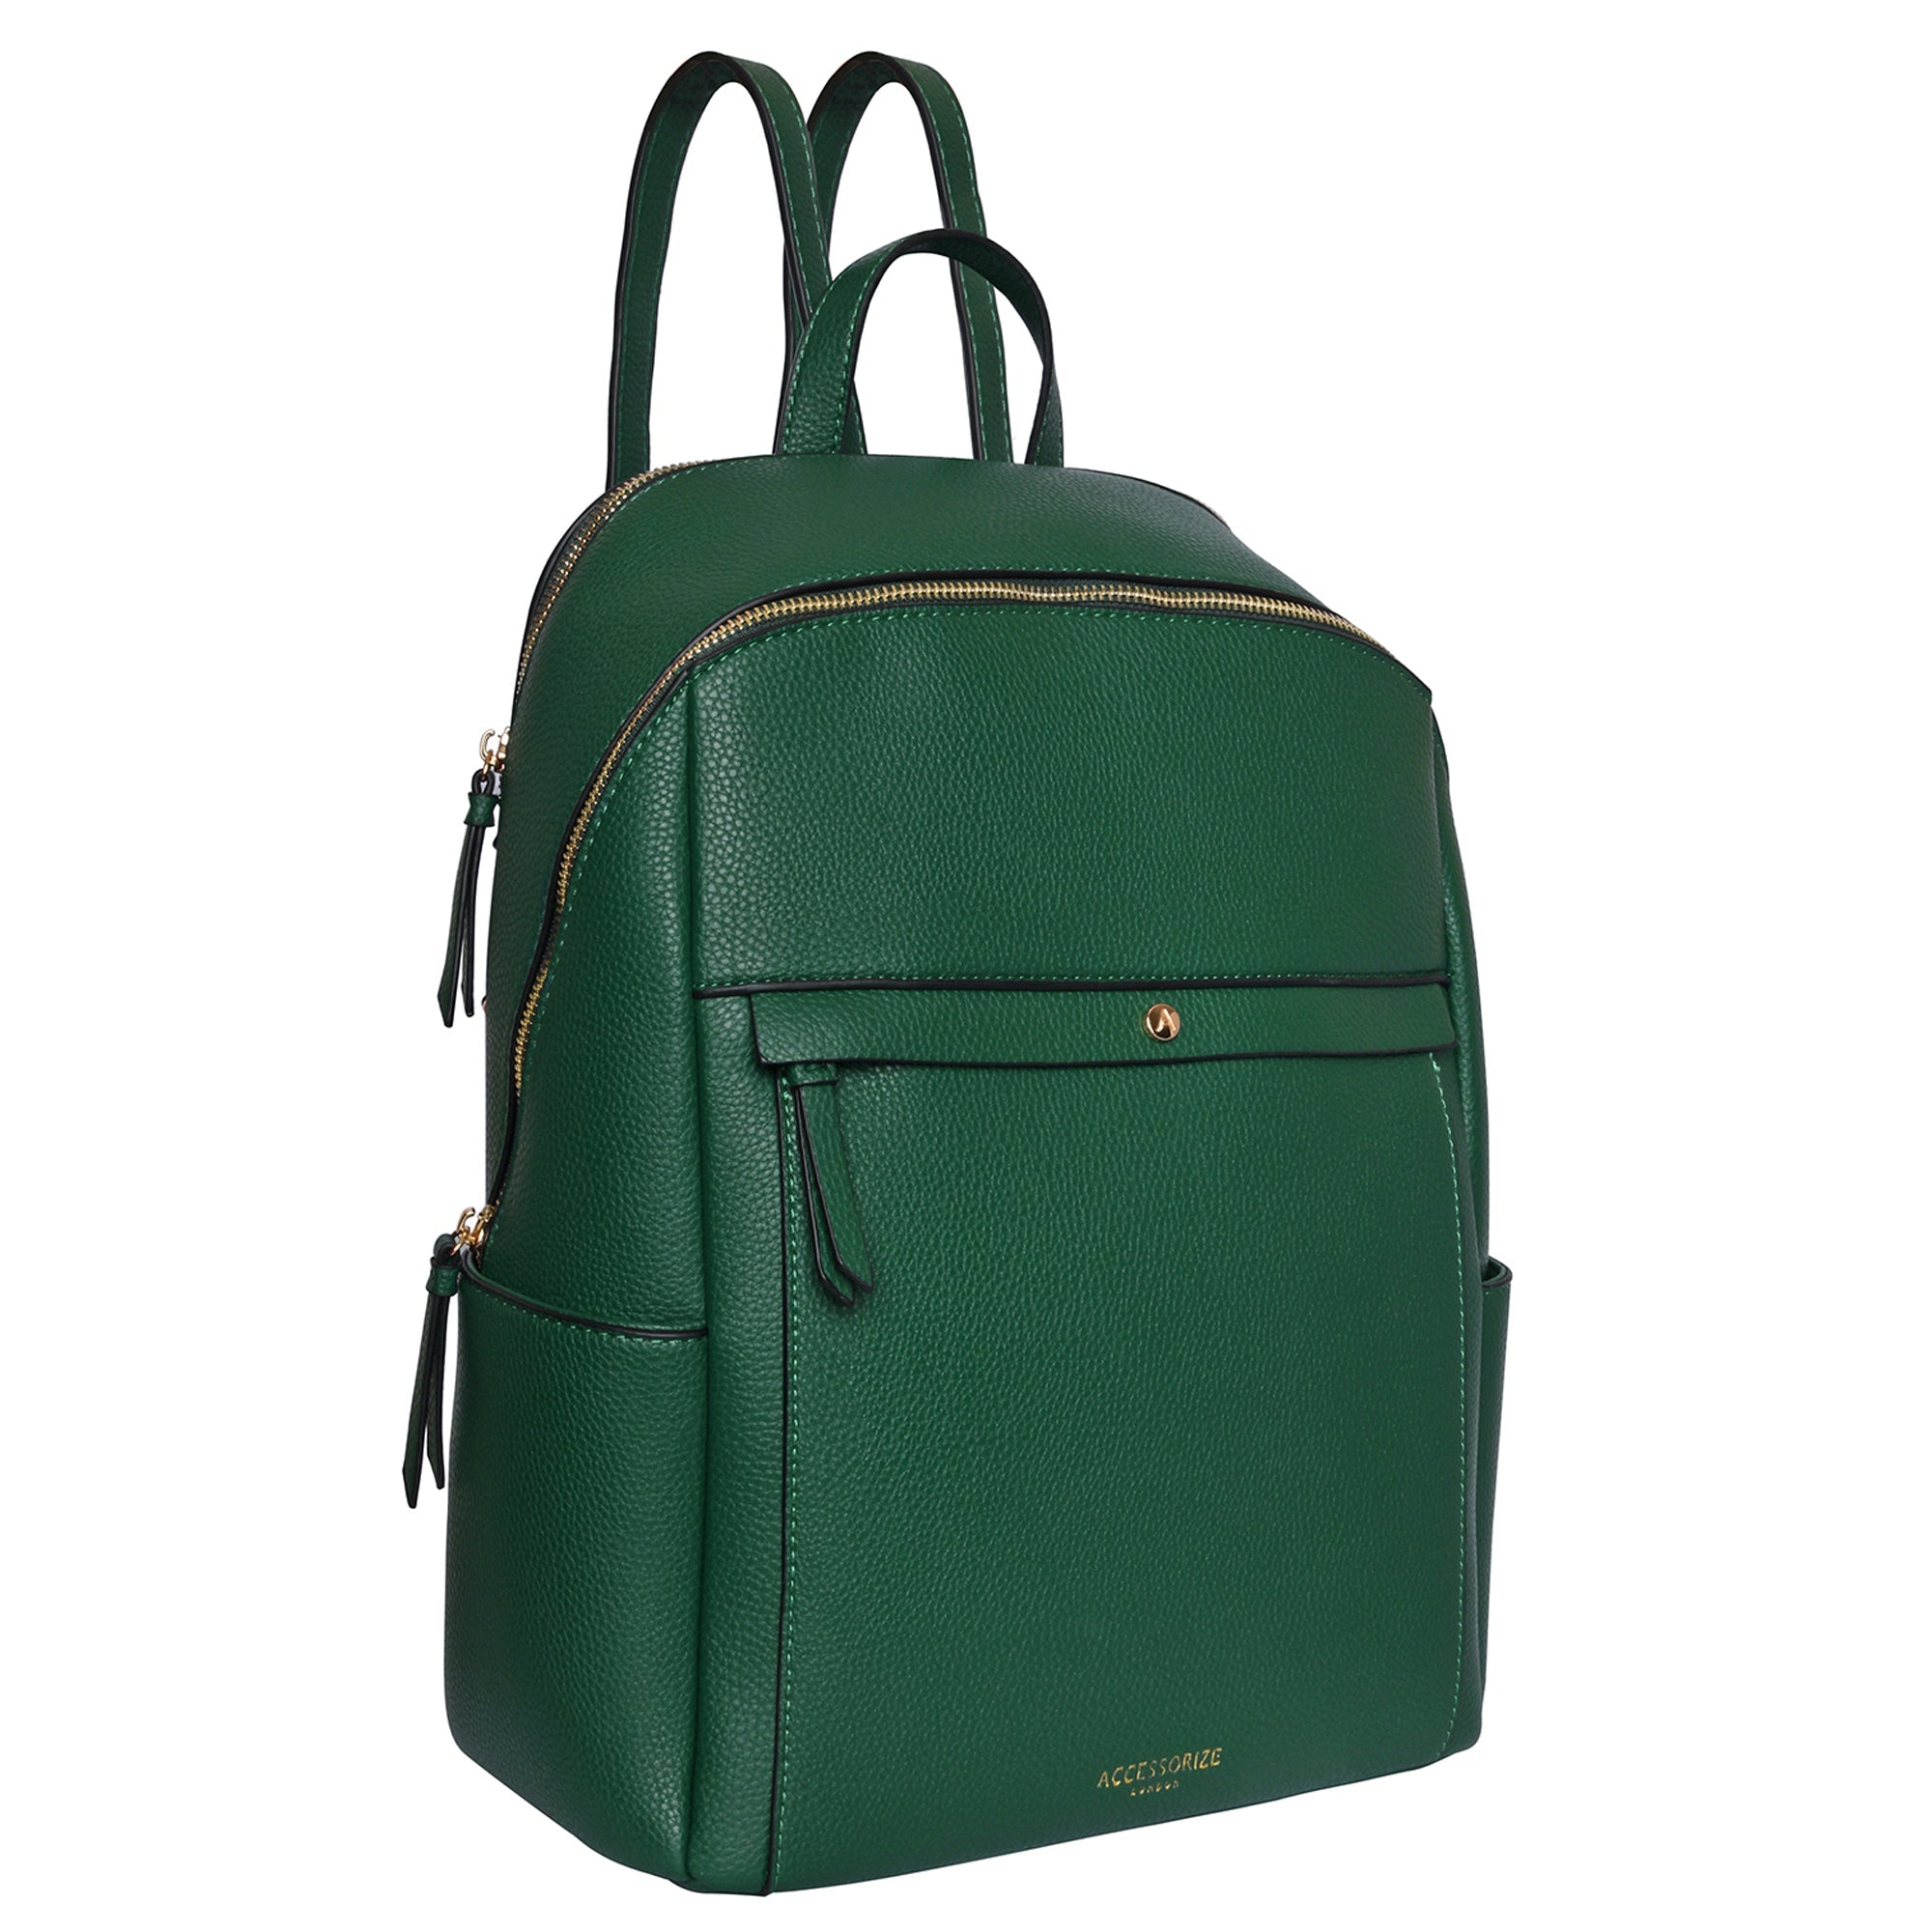 Accessorize London Women's Faux Leather Green Sammy Backpack